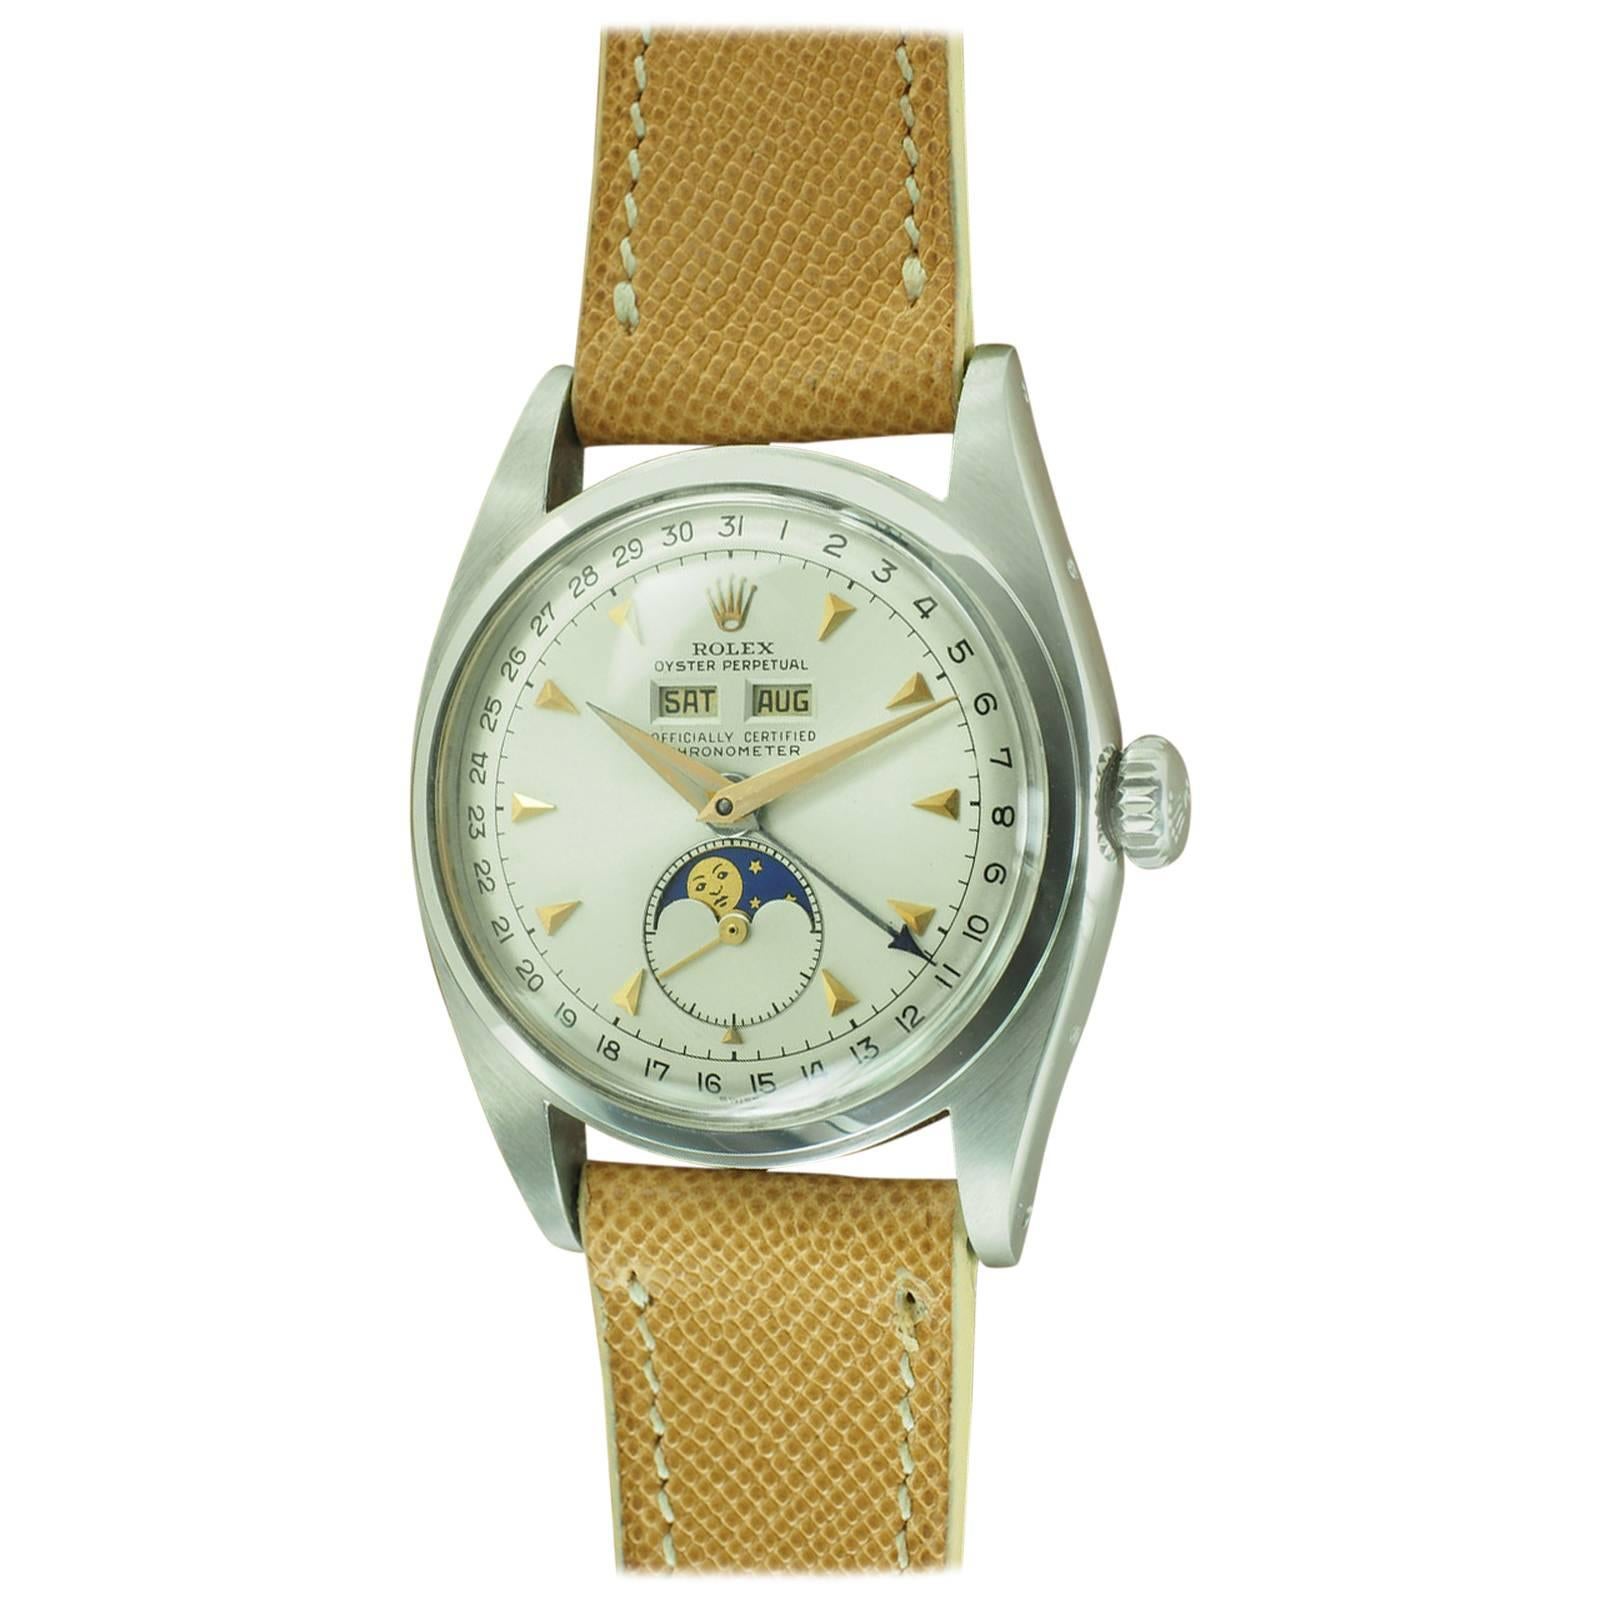 Rolex Stainless Steel Rolex Moonphase Wristwatch Ref 6062 For Sale